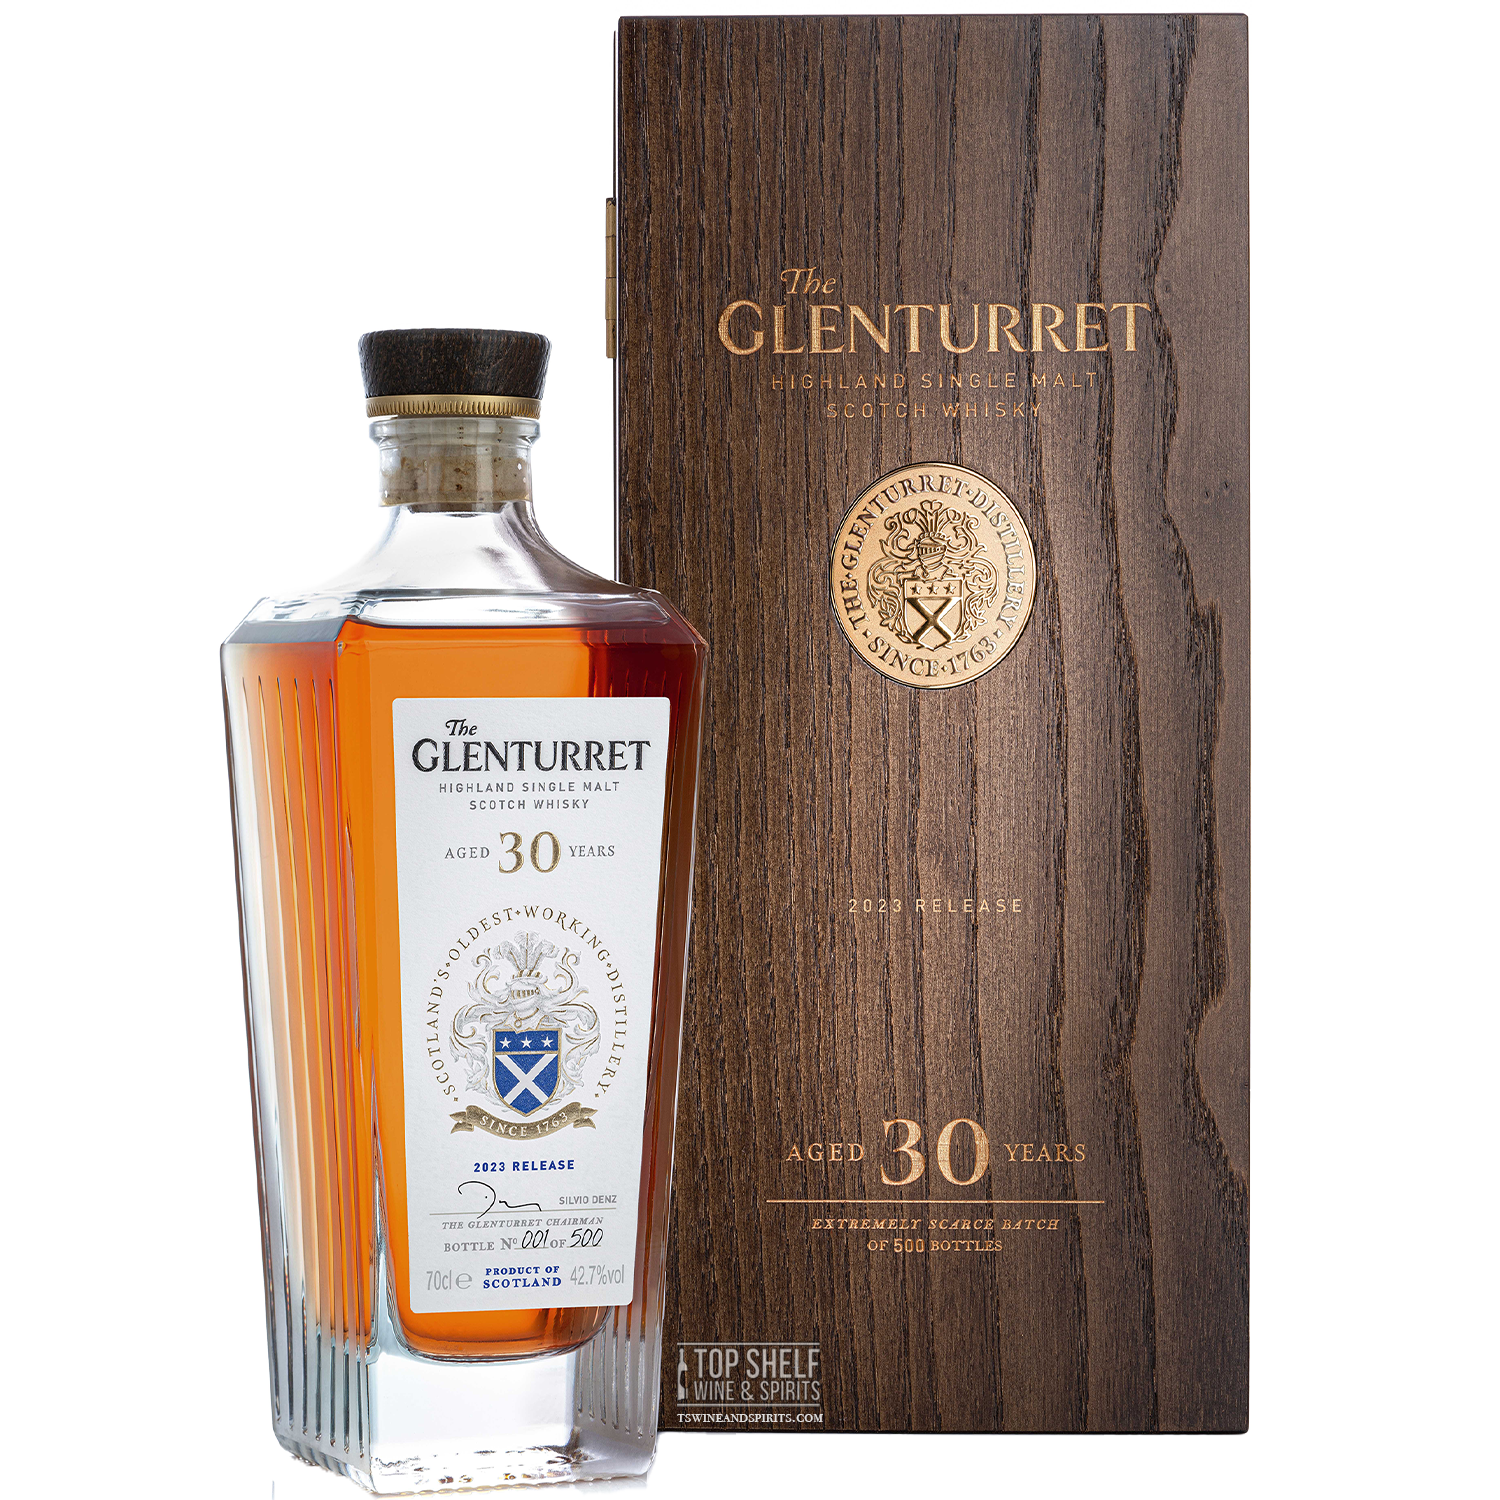 The Glenturret 30 Year Scotch Whisky